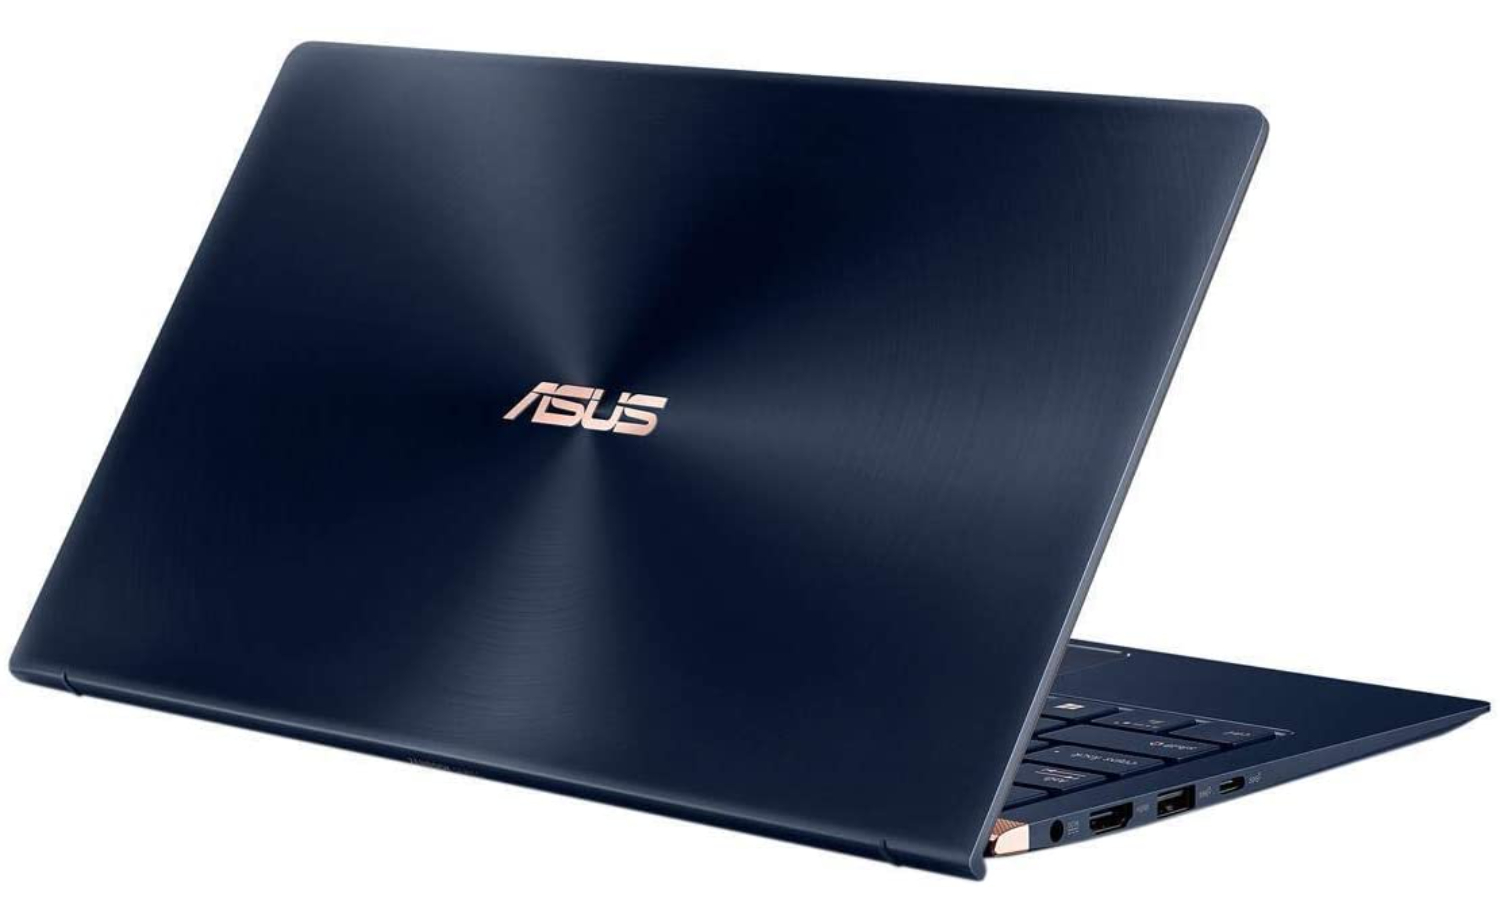 ASUS ZenBook Intel Core i5 8th Gen 8GB RAM 256GB SSD Windows 10 Home